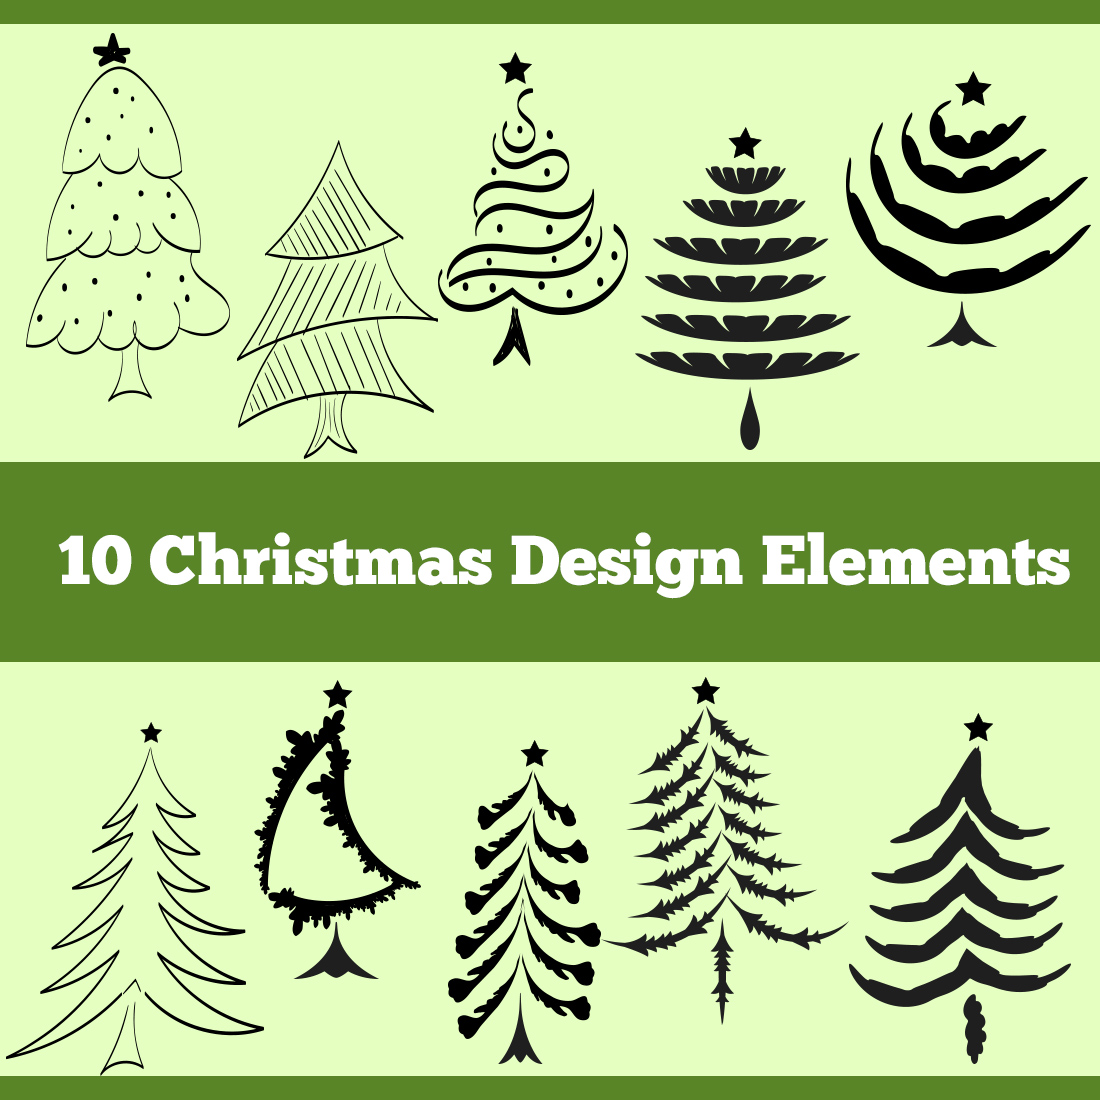 Christmas Tree Design cover image.